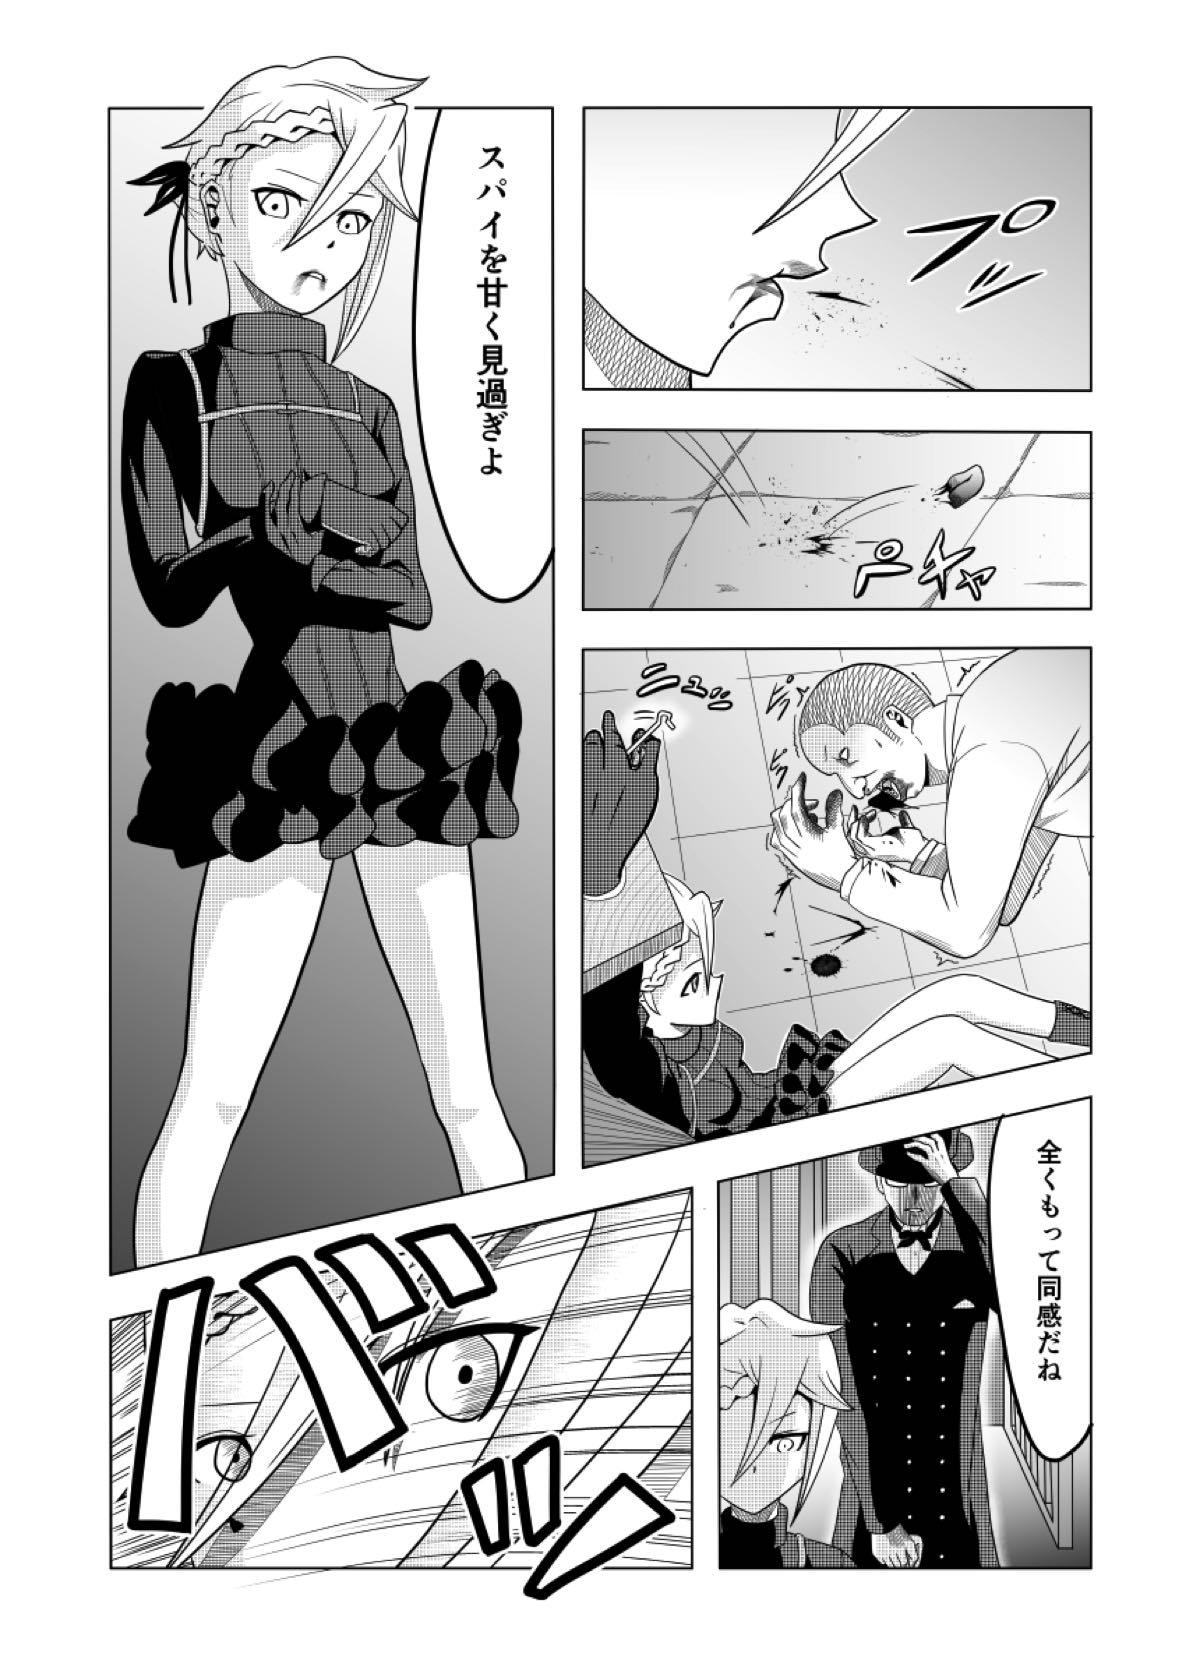 Student 捕まったスパイ - Princess principal Trio - Page 4